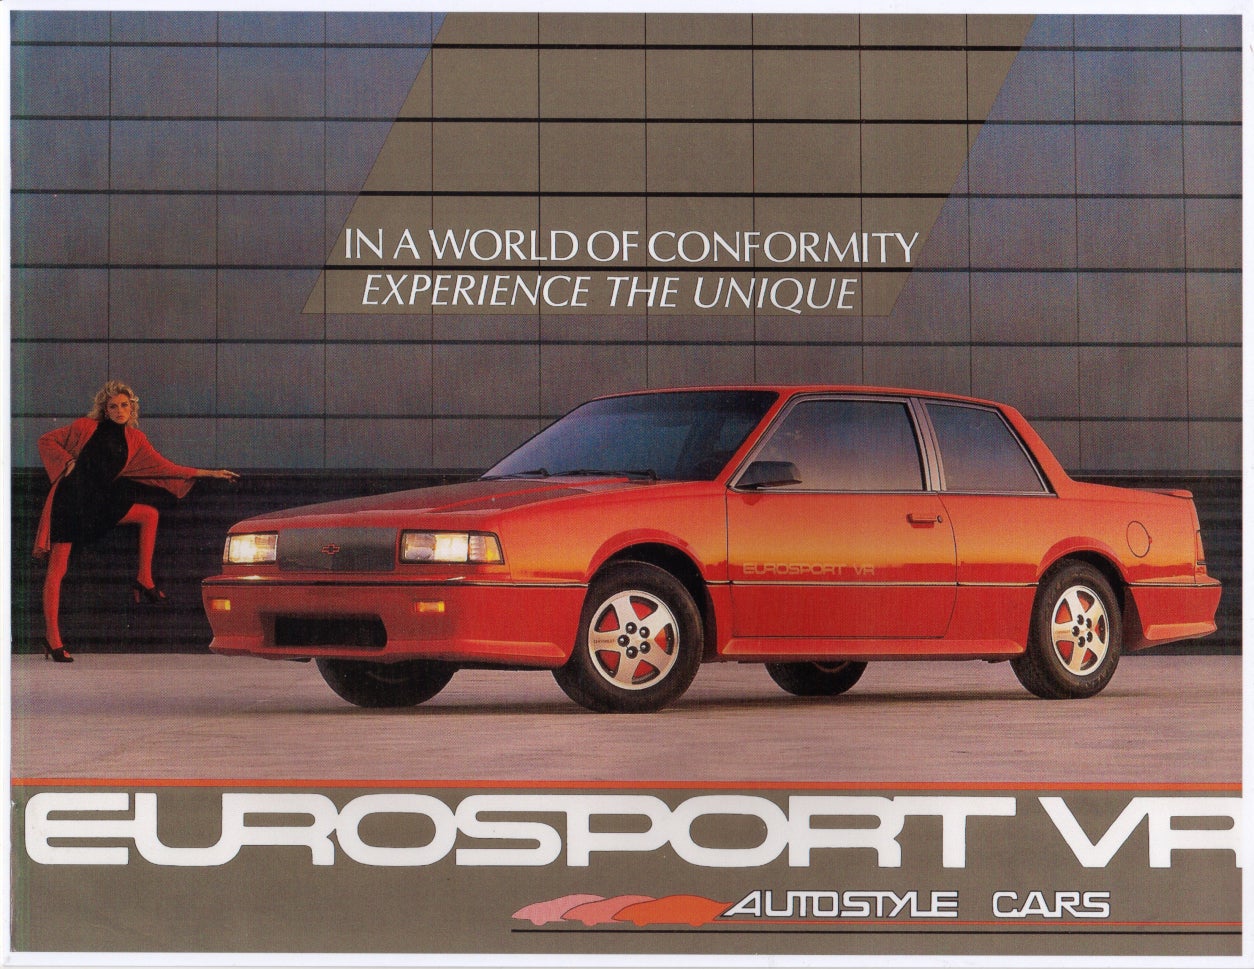 1990+chevy+celebrity+wagon